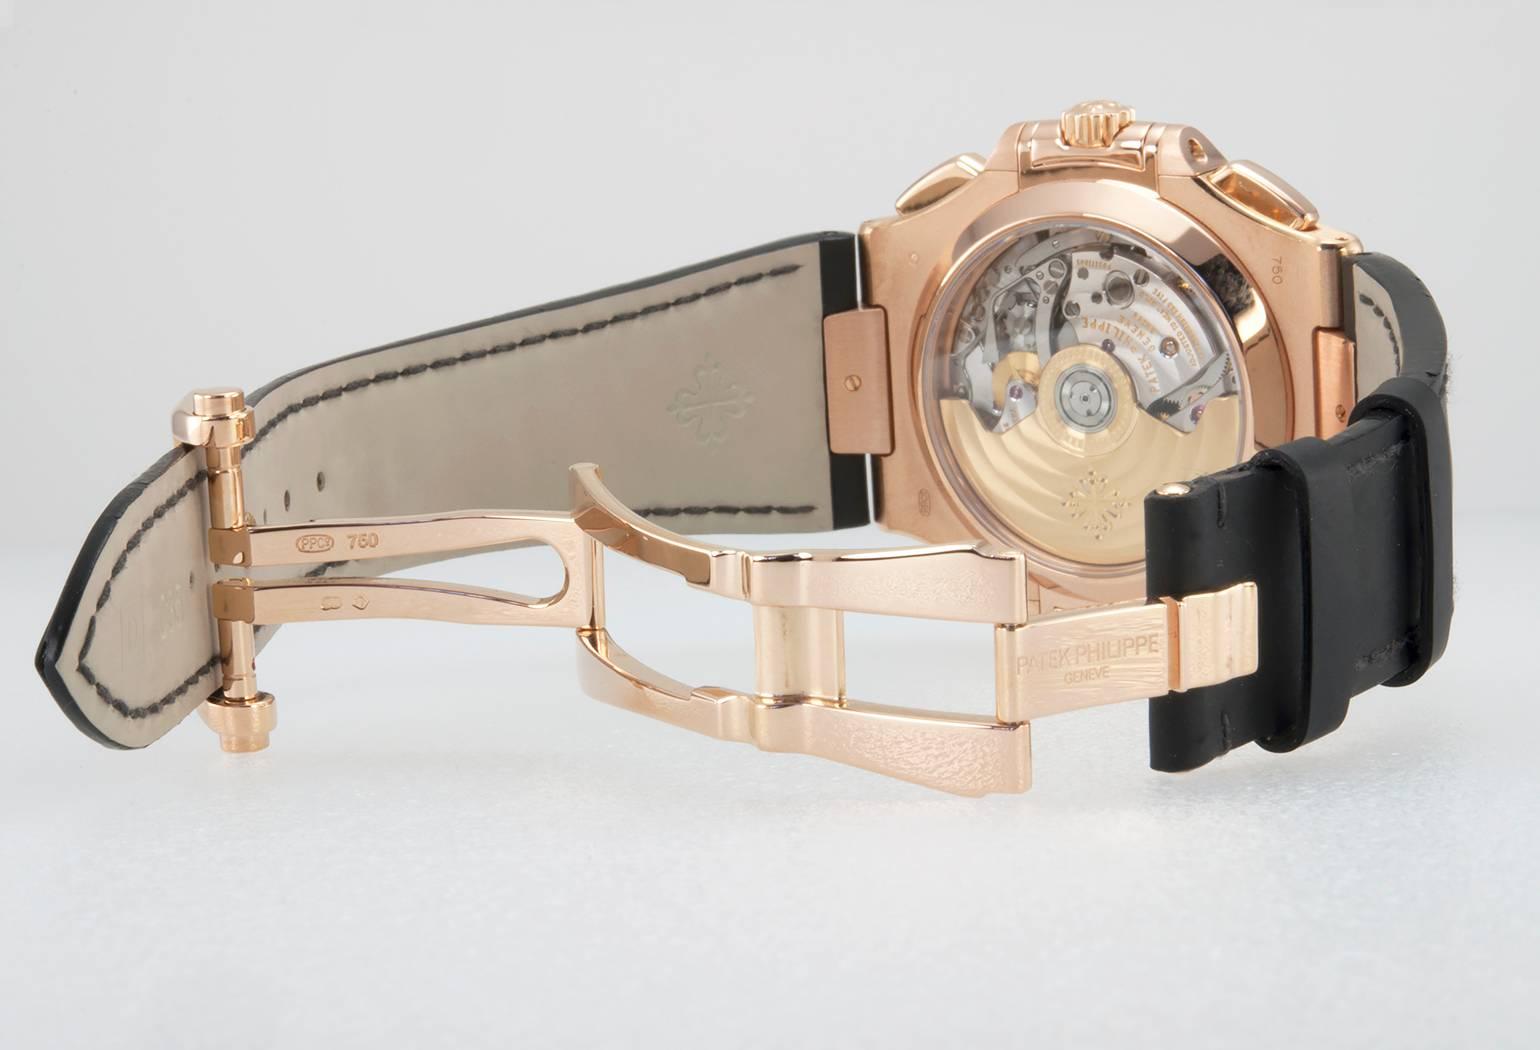 Patek Philippe rose gold Nautilus Chronograph Wristwatch ref 5980R For Sale 1